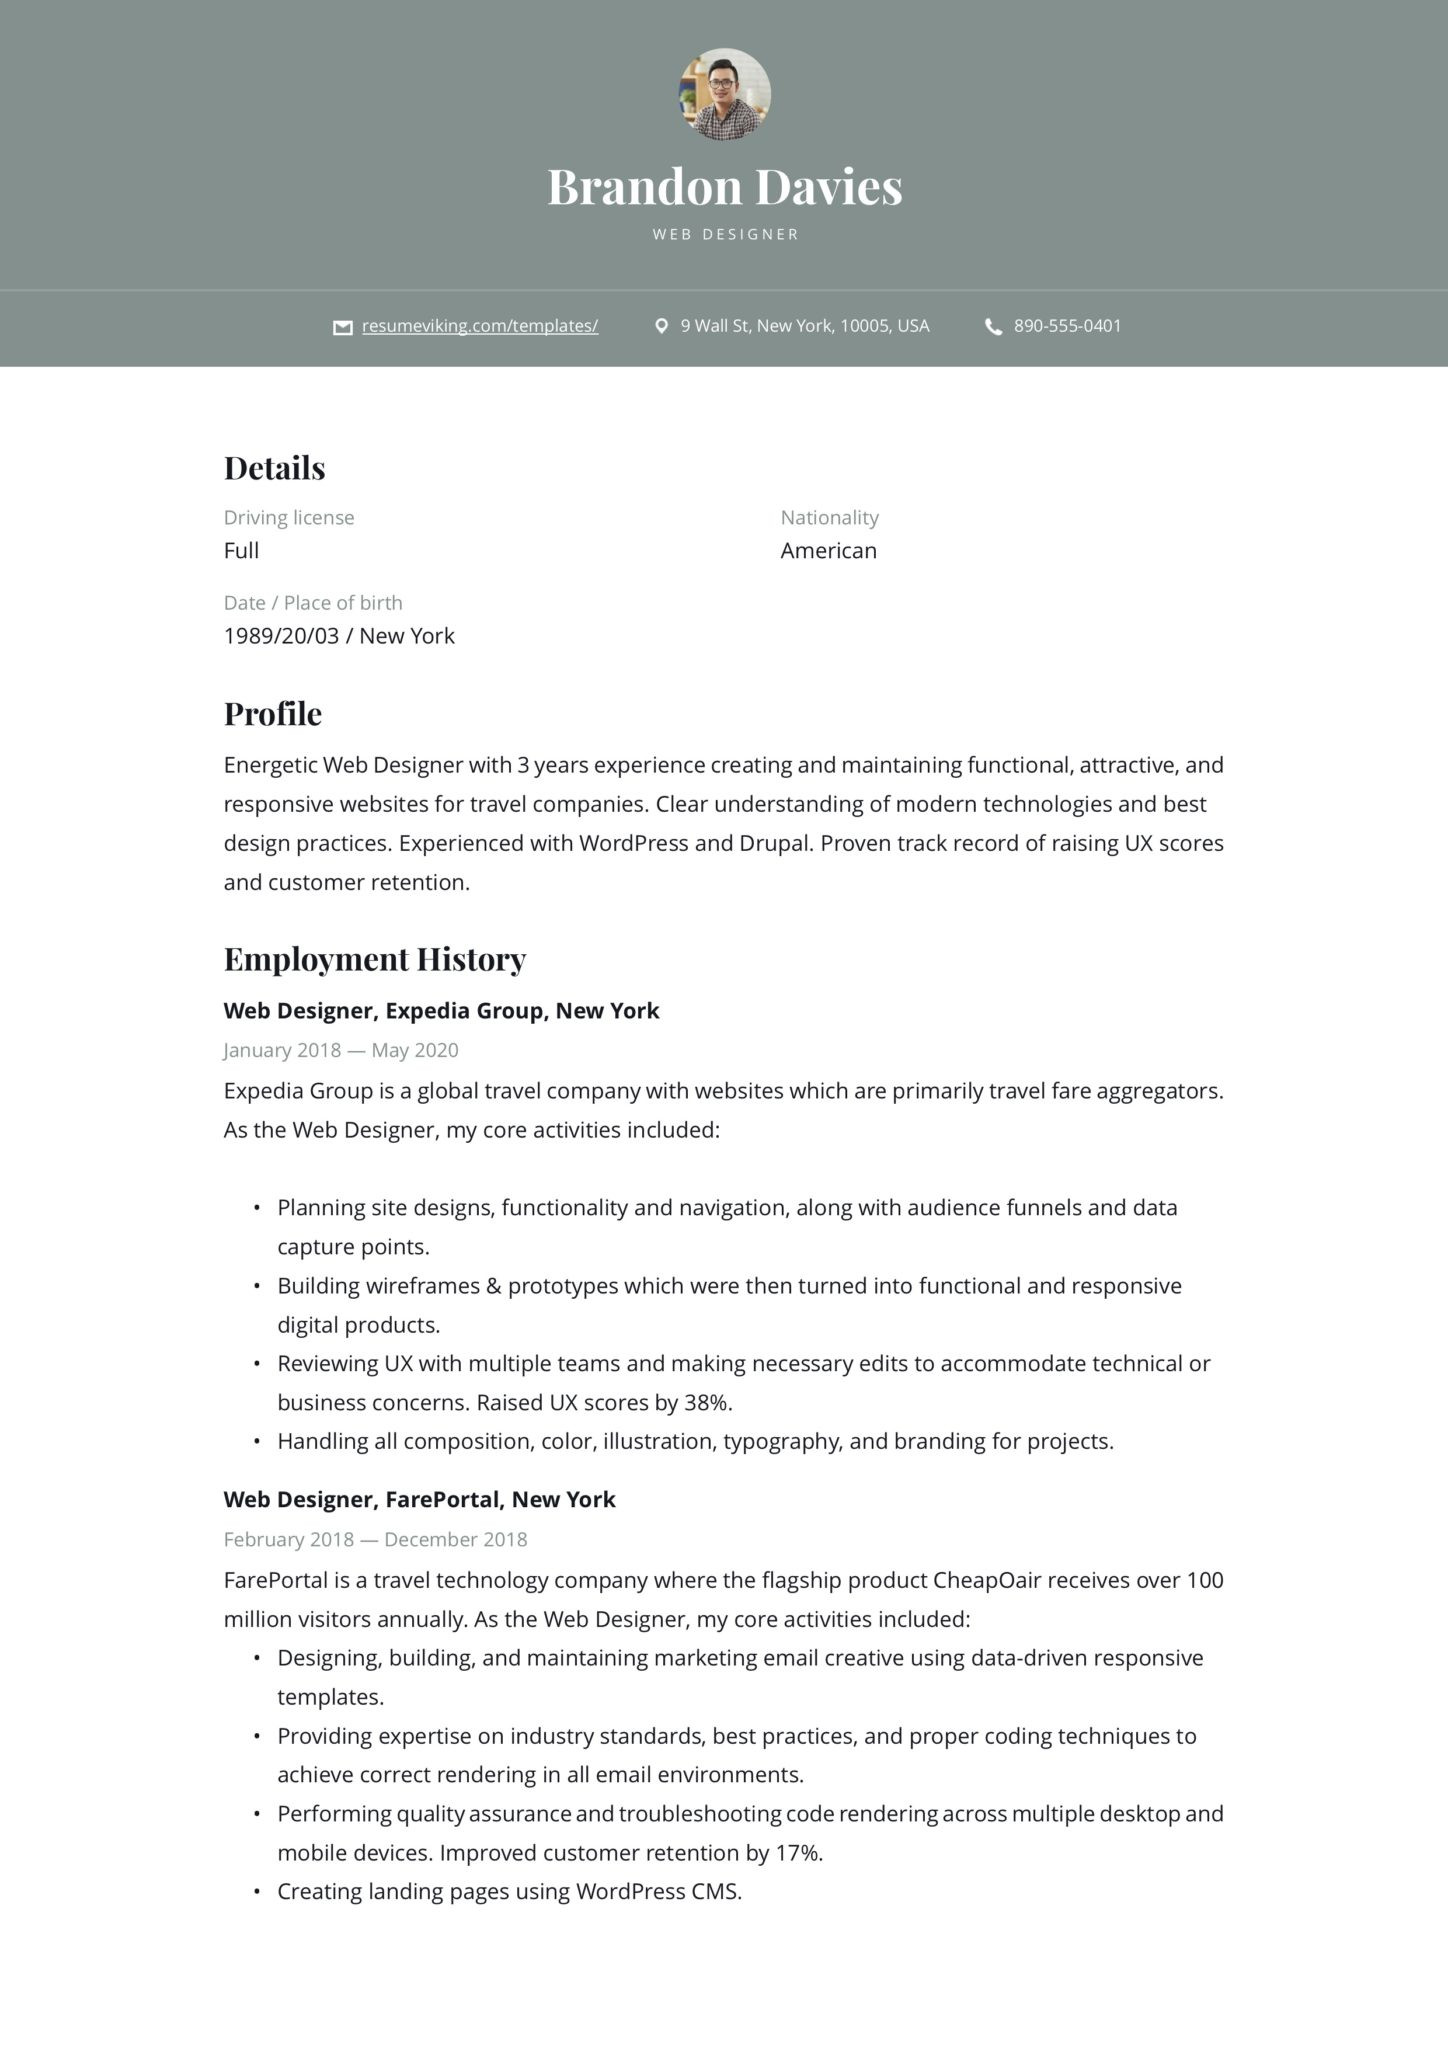 Web Designer Resume Sample for 2 Year Experience 19 Free Web Designer Resume Examples & Guide Pdf 2020